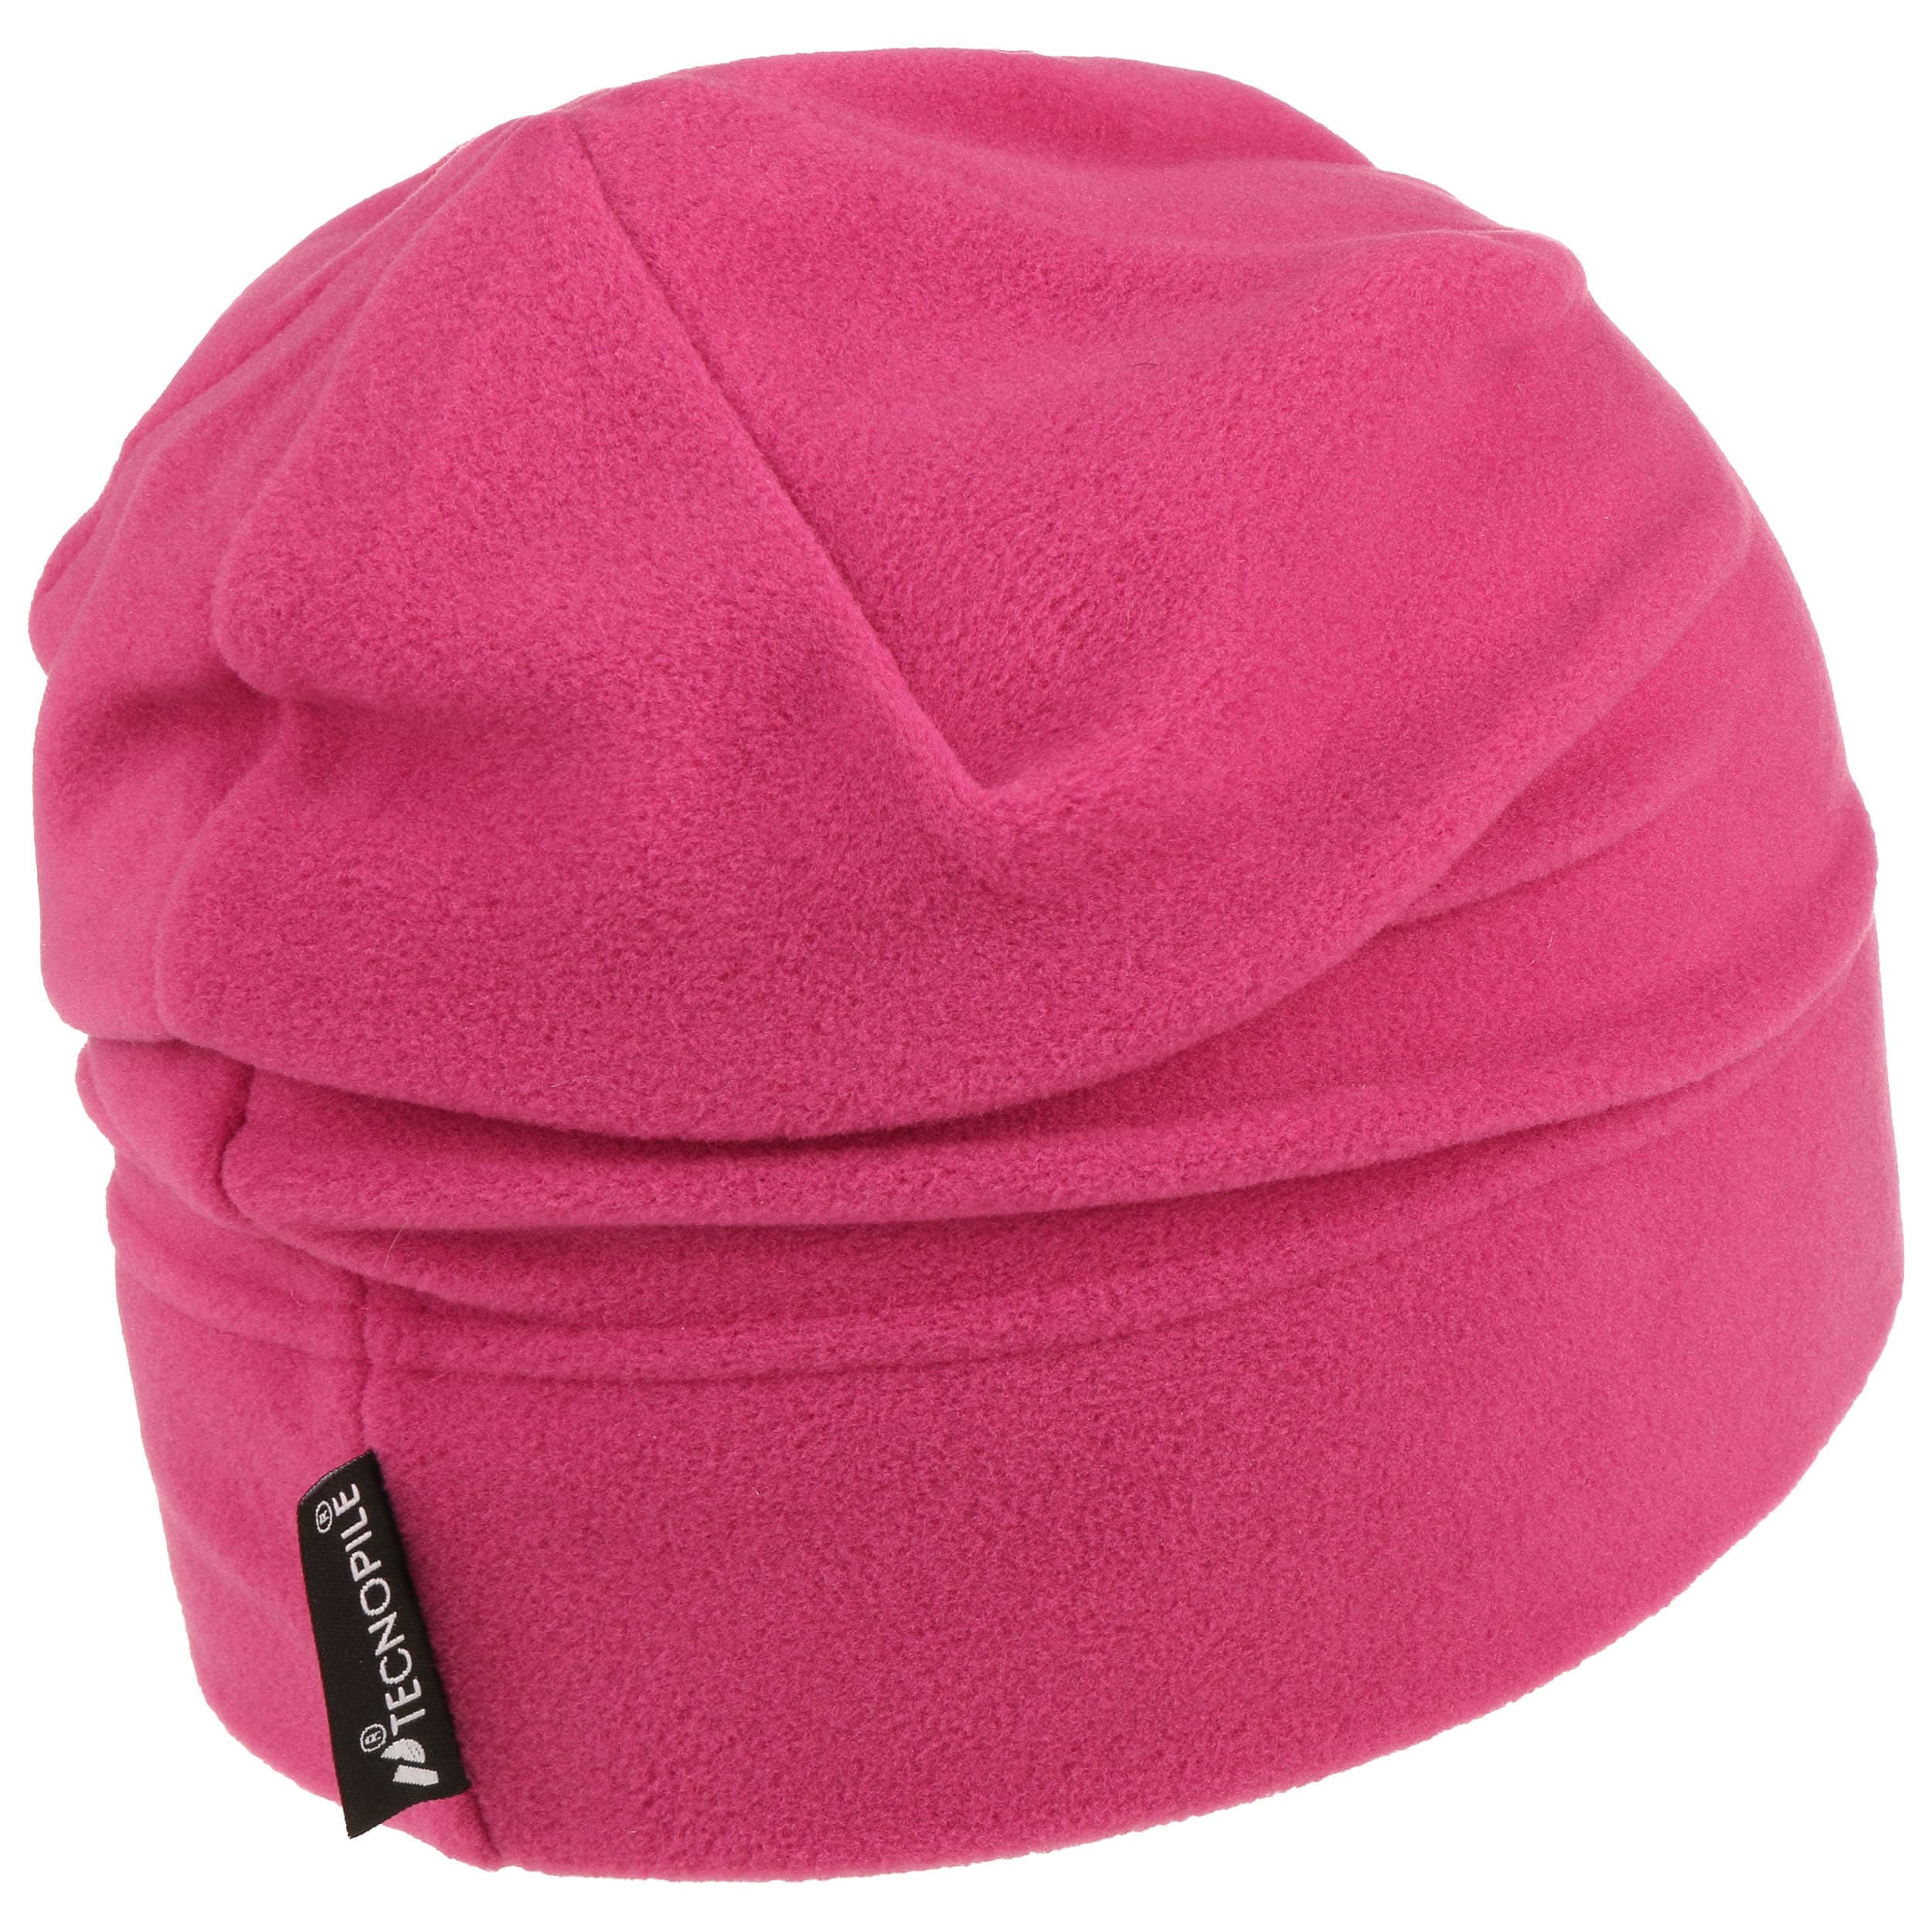 Real Stuff Beanie Hat by Jack Wolfskin - 21,95 €